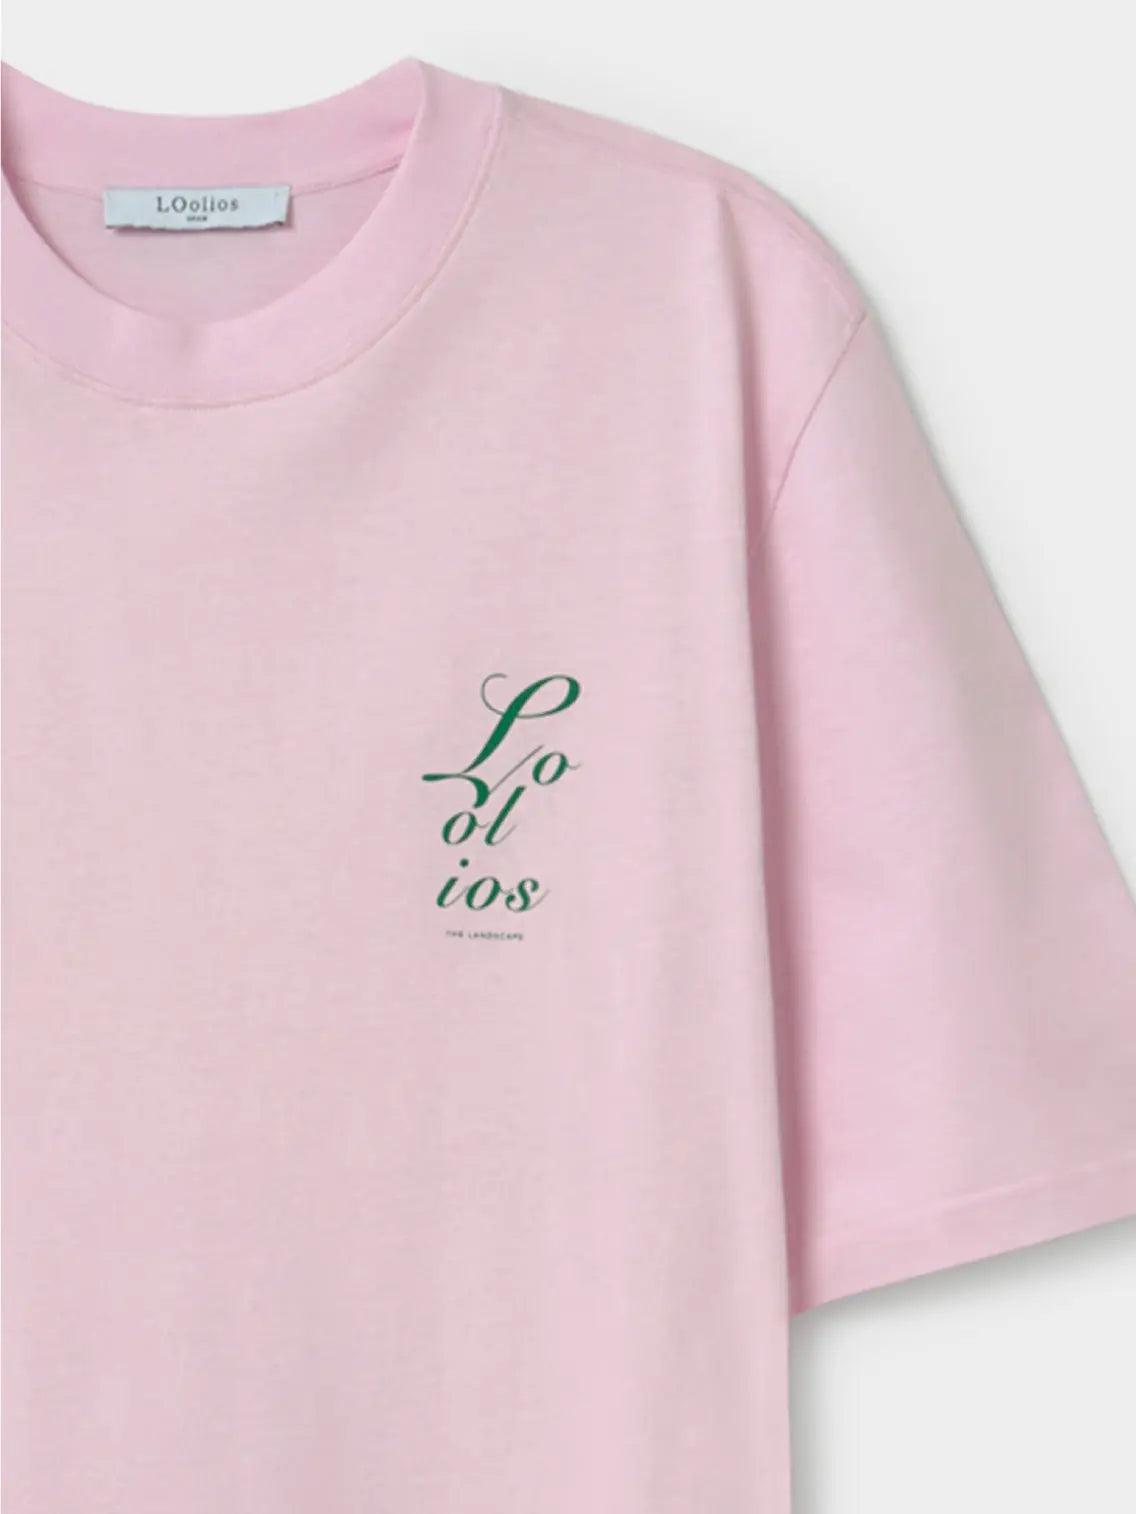 Matisse Pink T-Shirt LOolios